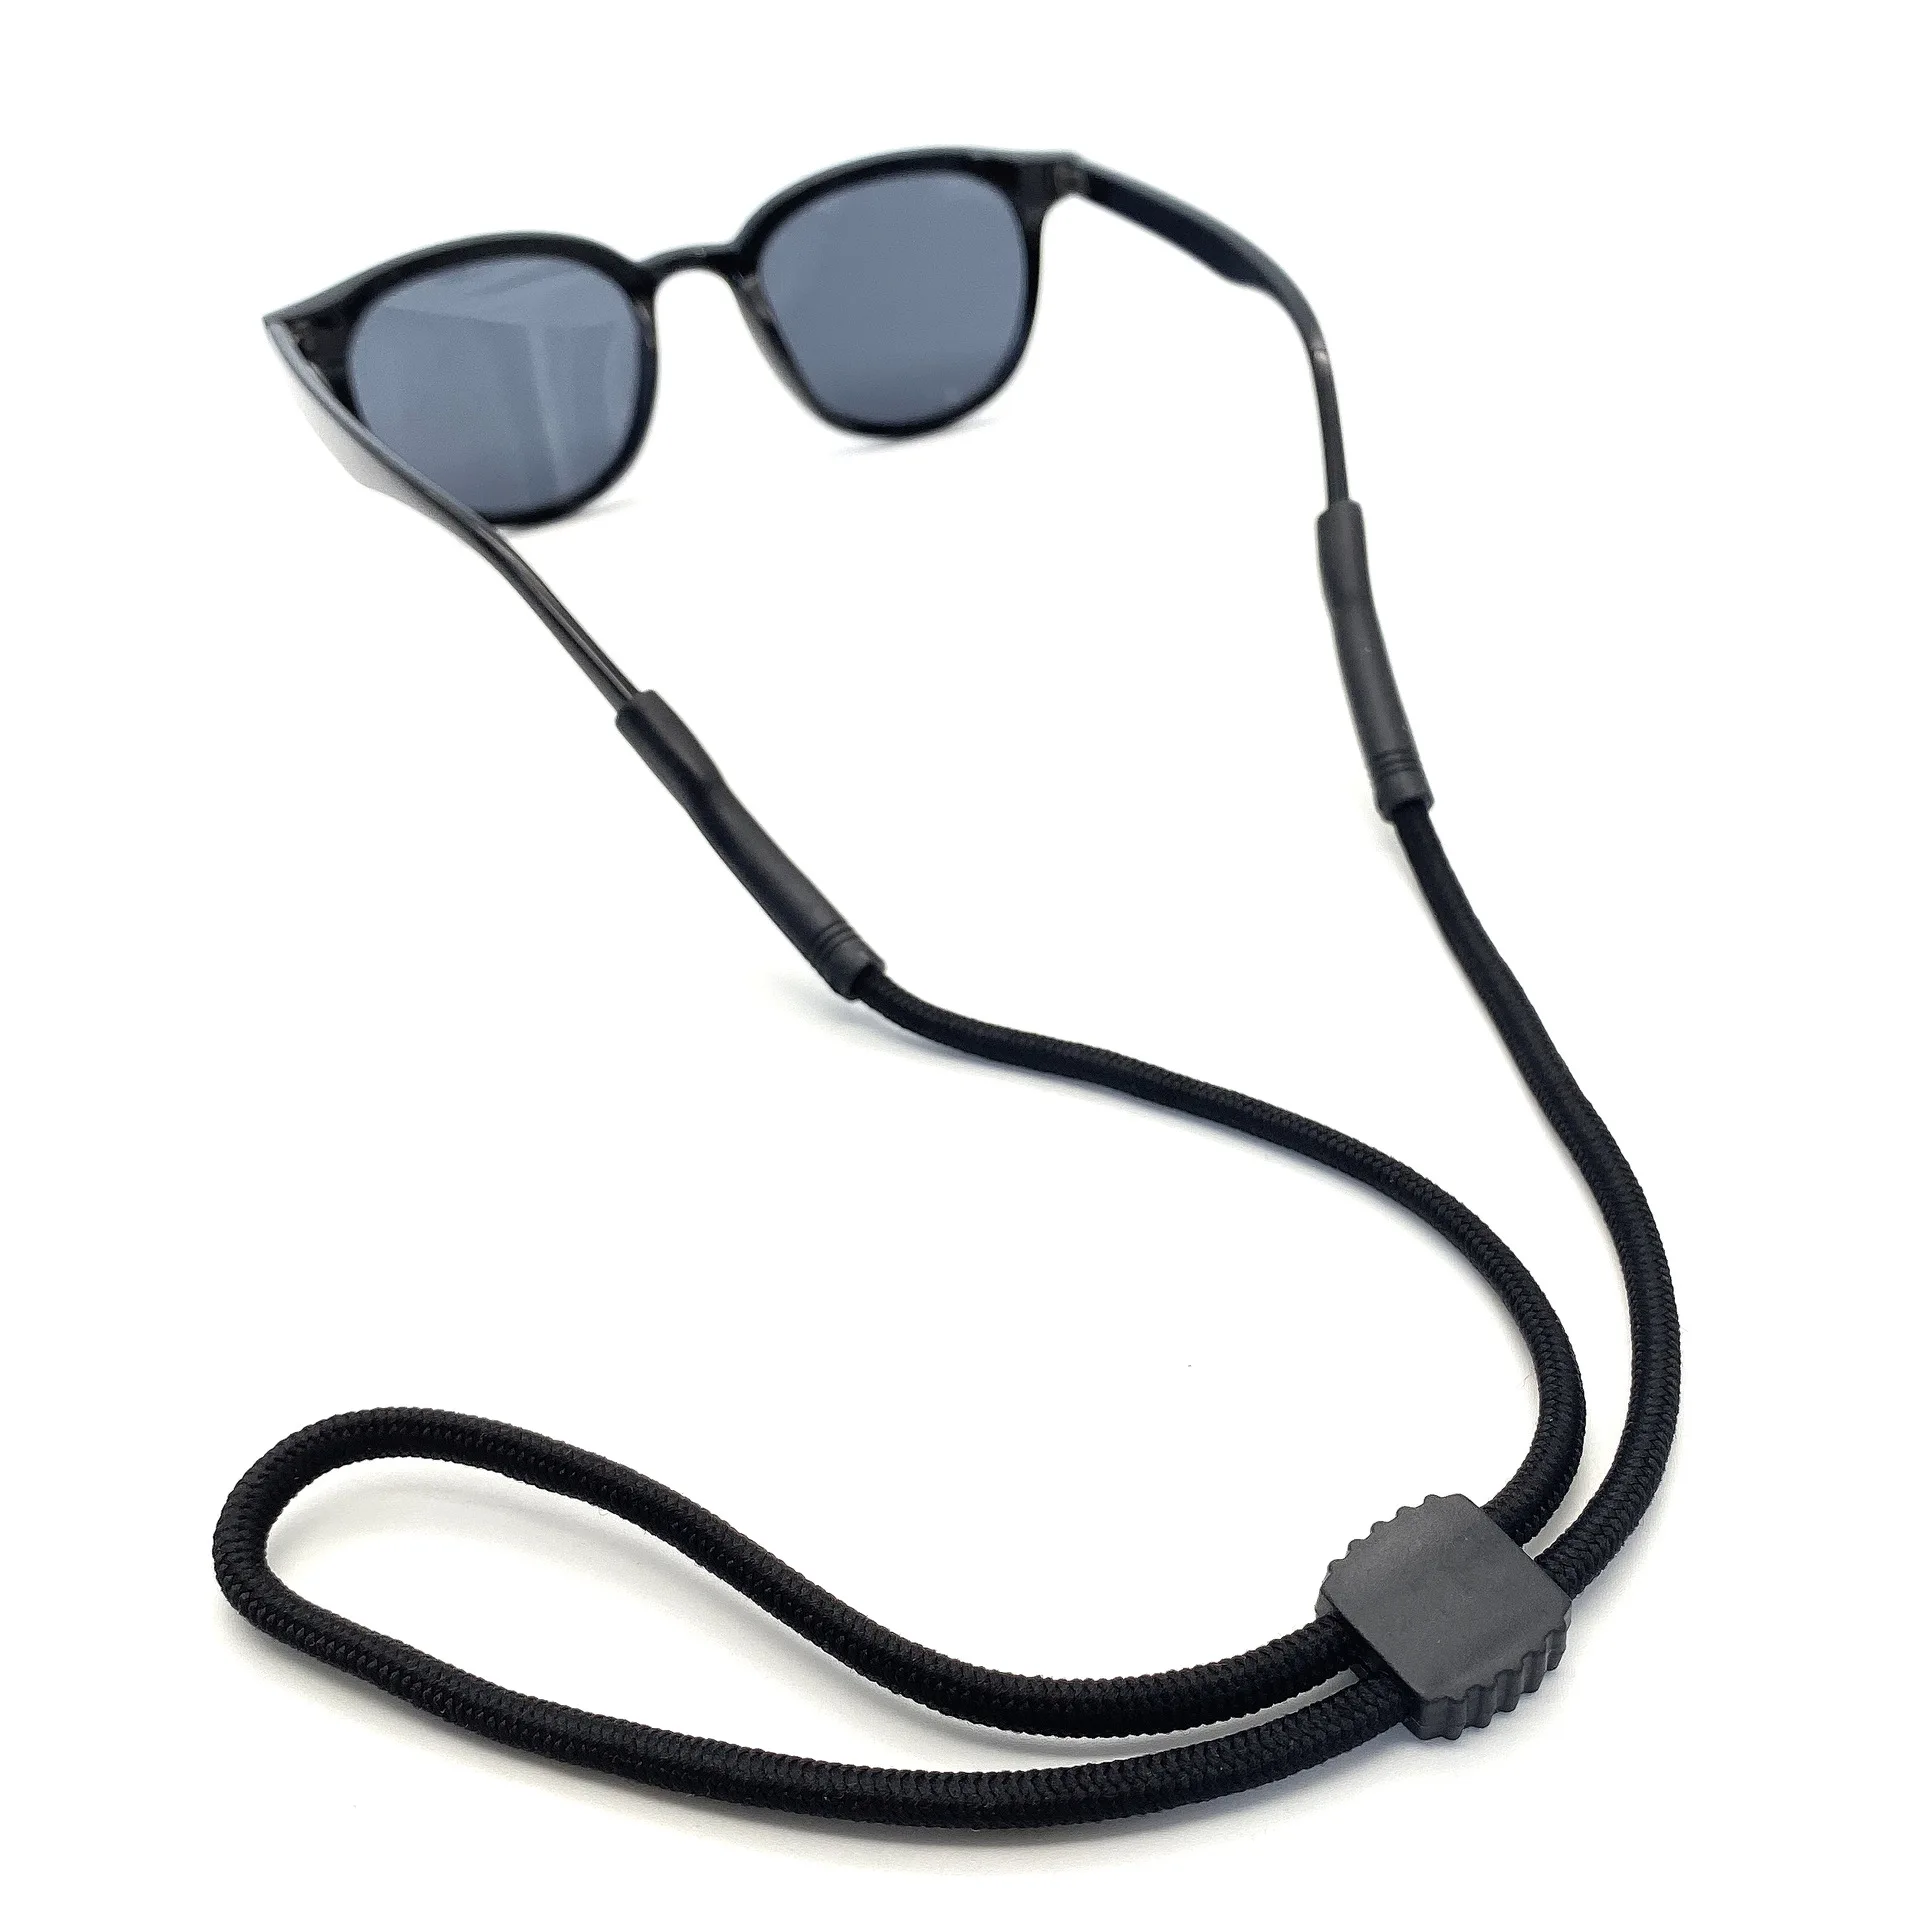 10pcs Sunglasses Neck Cord Strap Eyeglass Glasses Anti-Slip String Lanyard